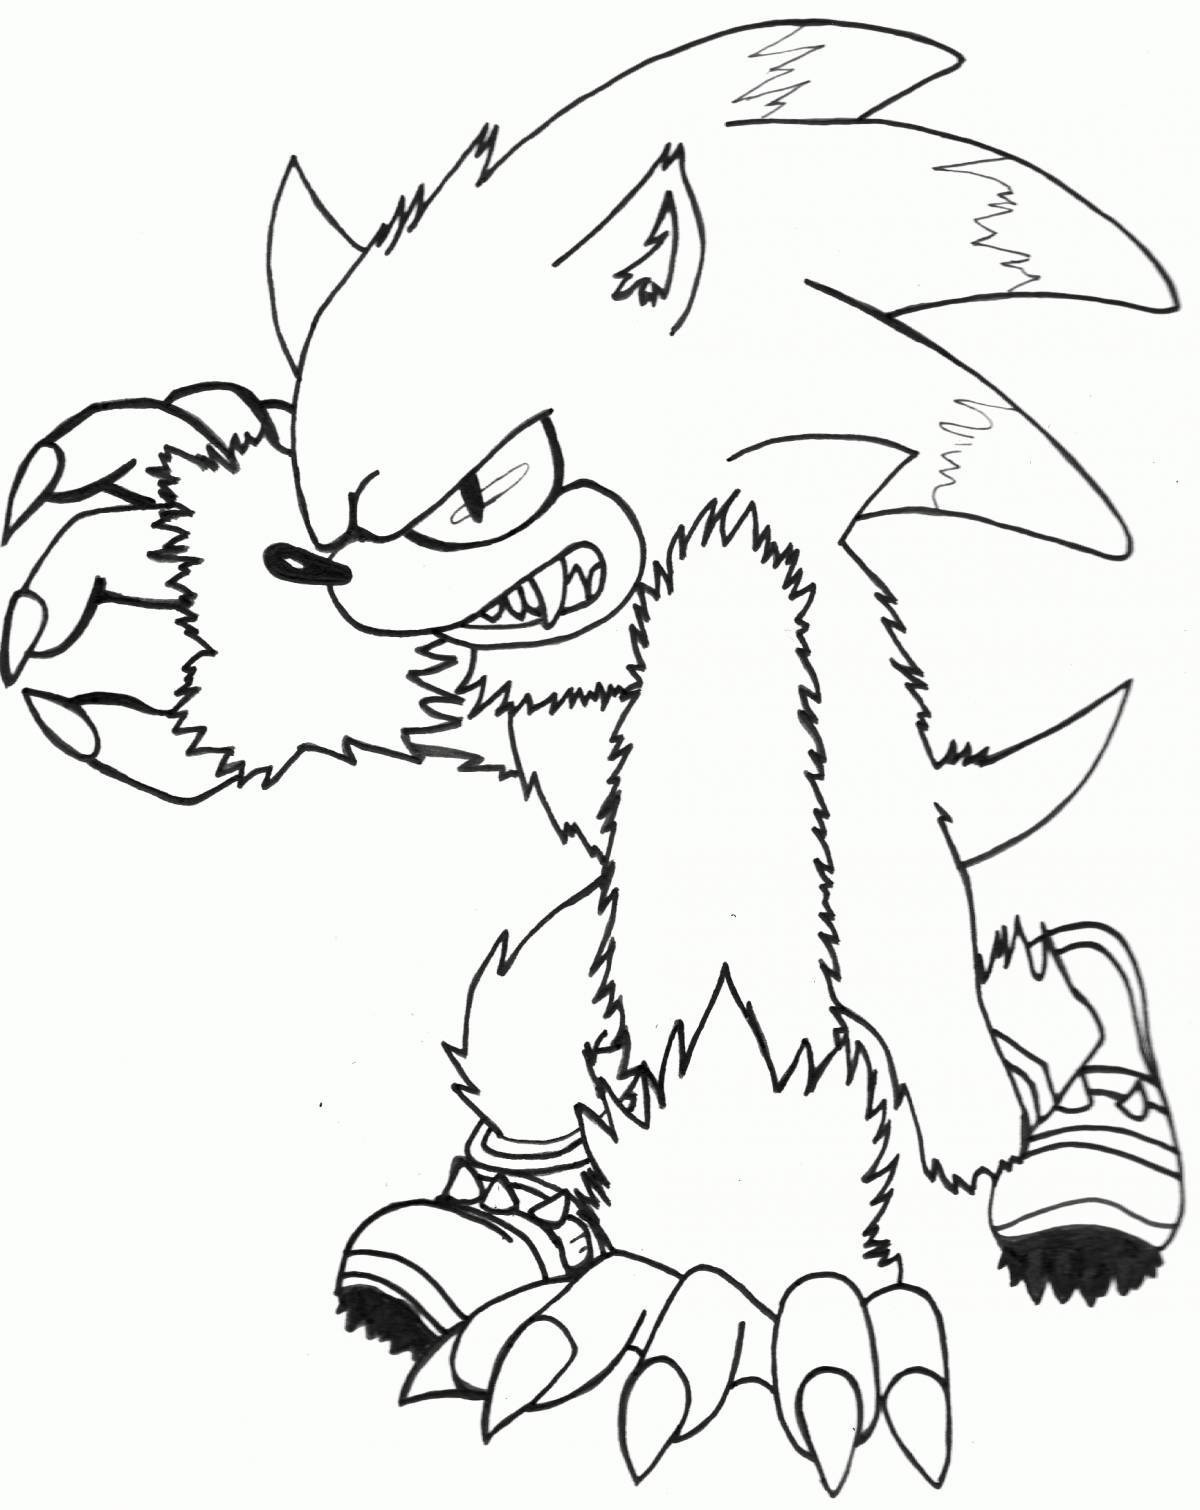 Sonic.exe fun coloring